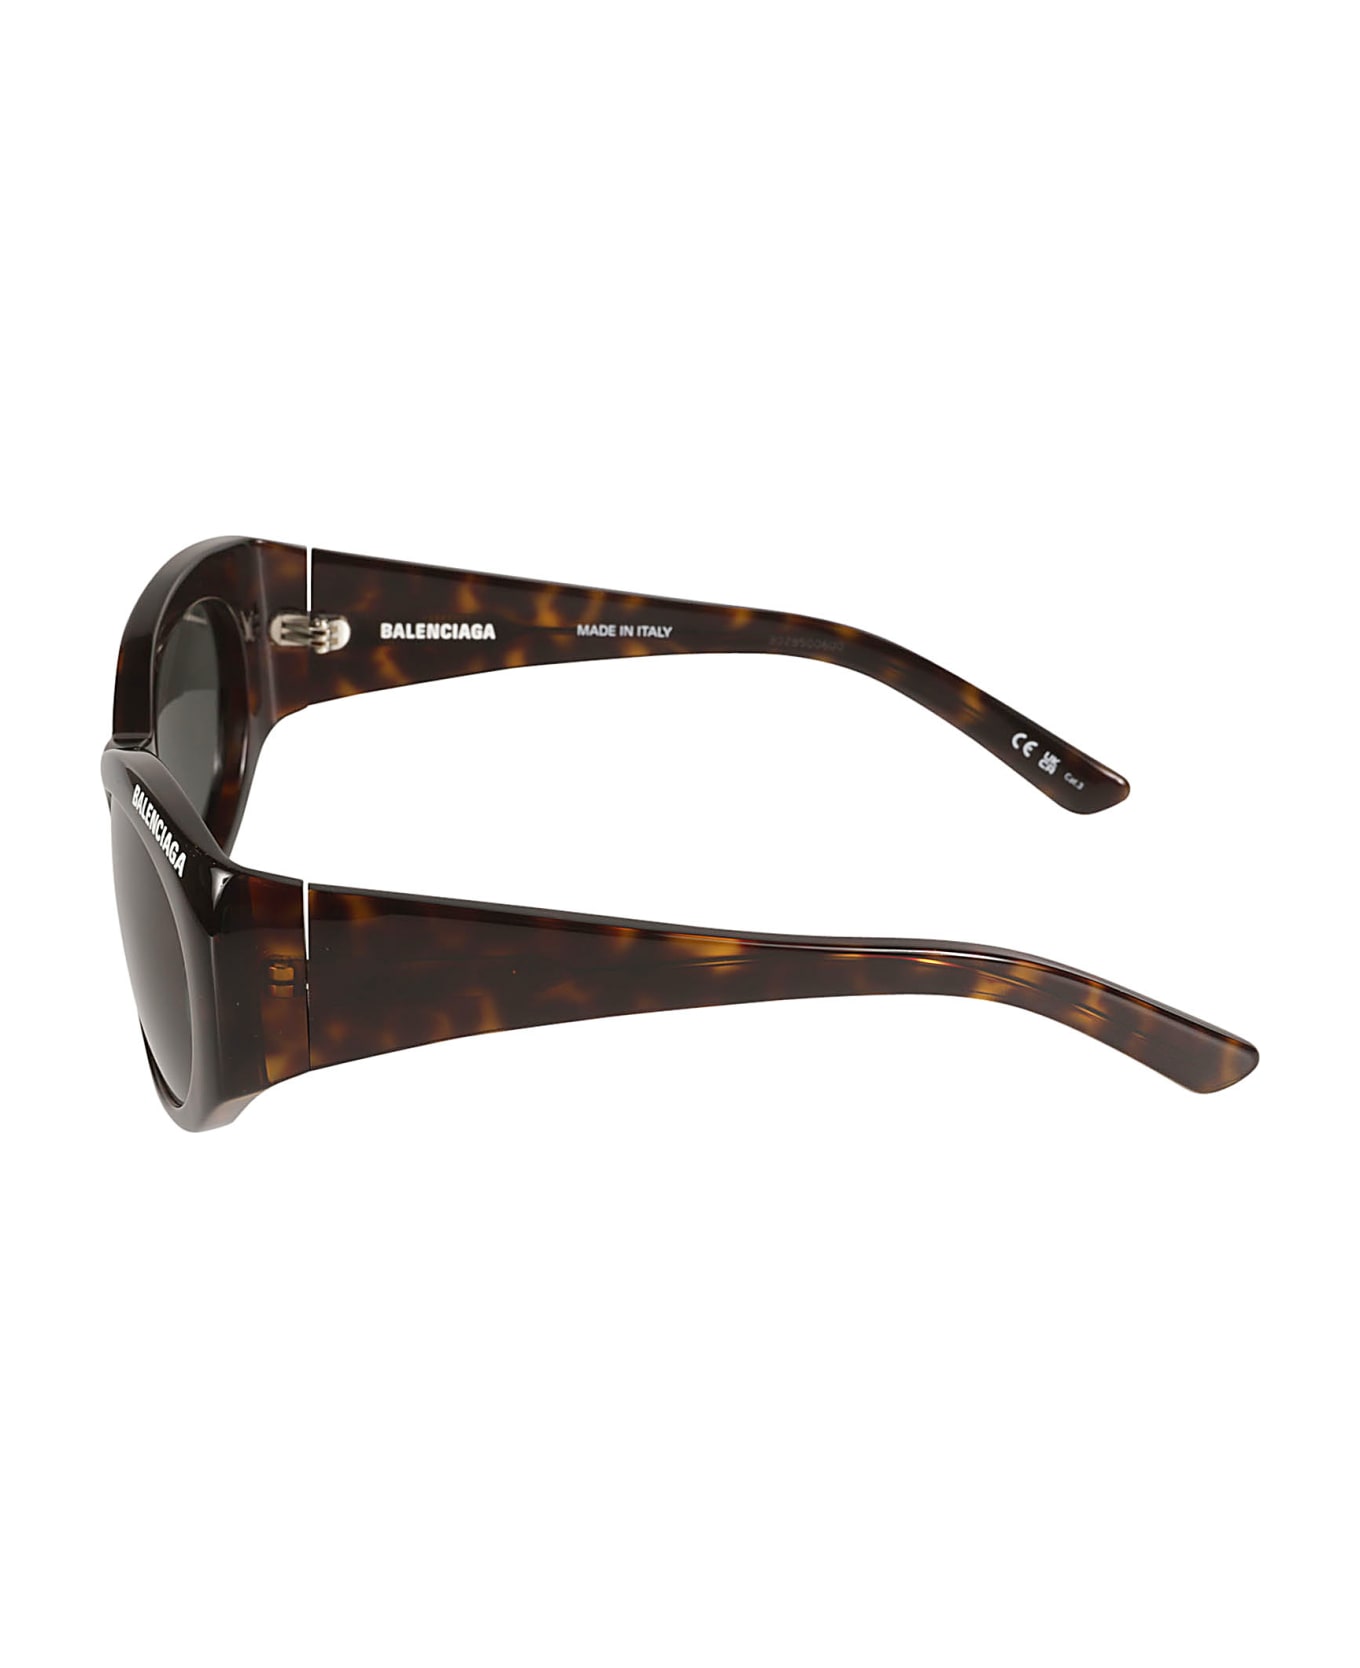 Balenciaga Eyewear Flame Effect Round Frame Sunglasses - Havana/Green サングラス